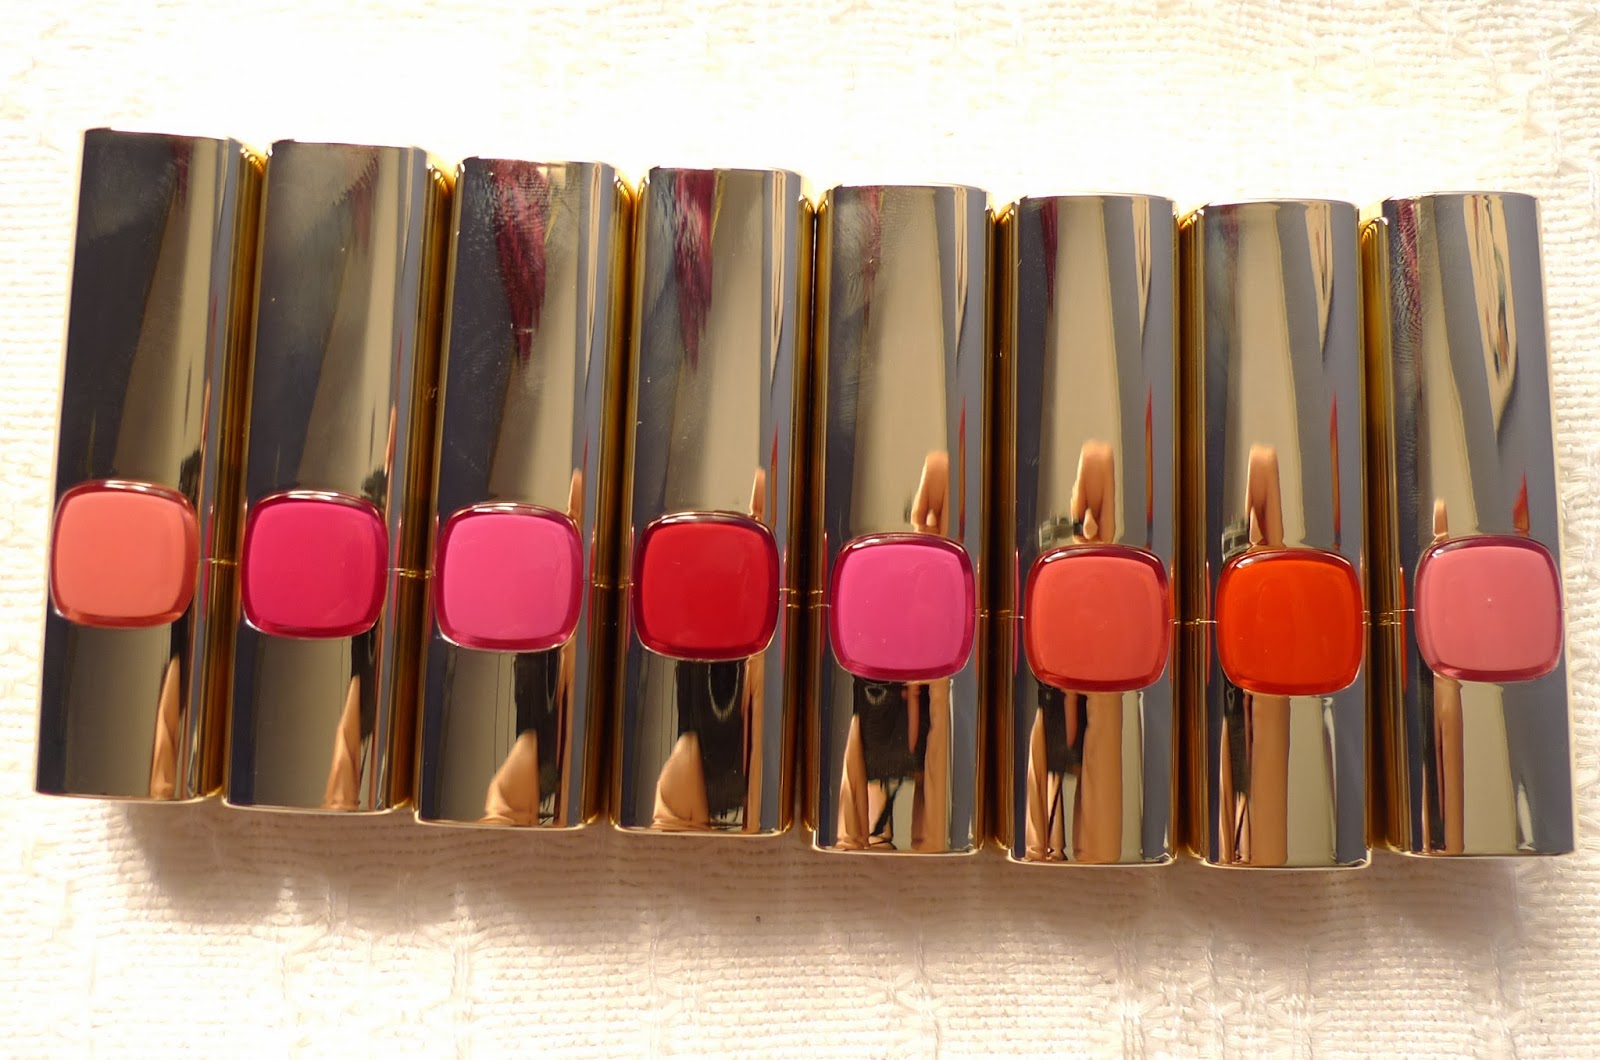 L'oreal Color Riche Le Rouge Lipsticks Review + Swatches.